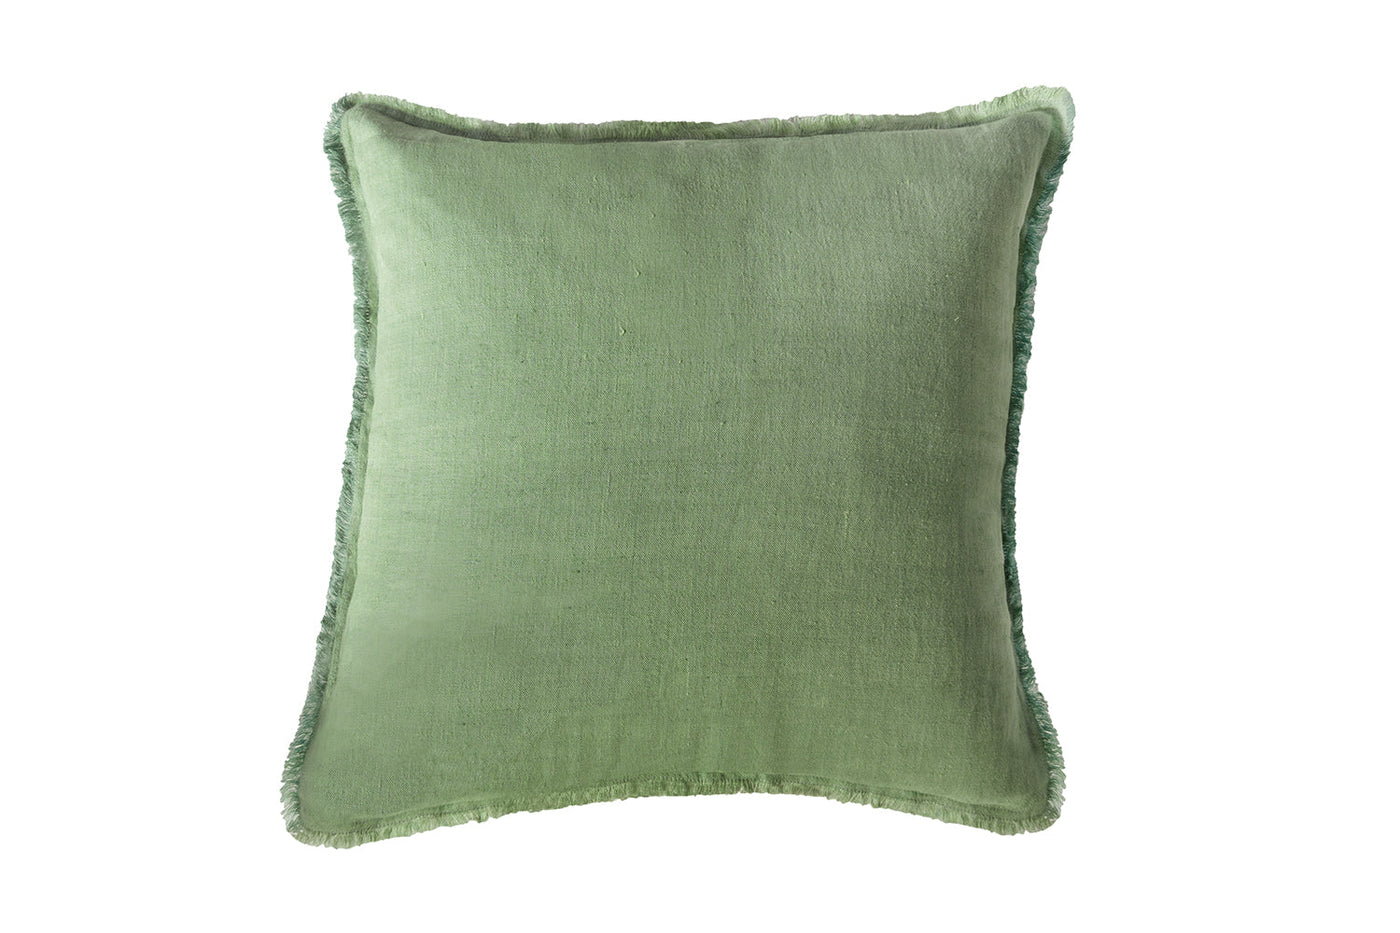 Green Cross-dye So Soft Linen Pillows by Anaya